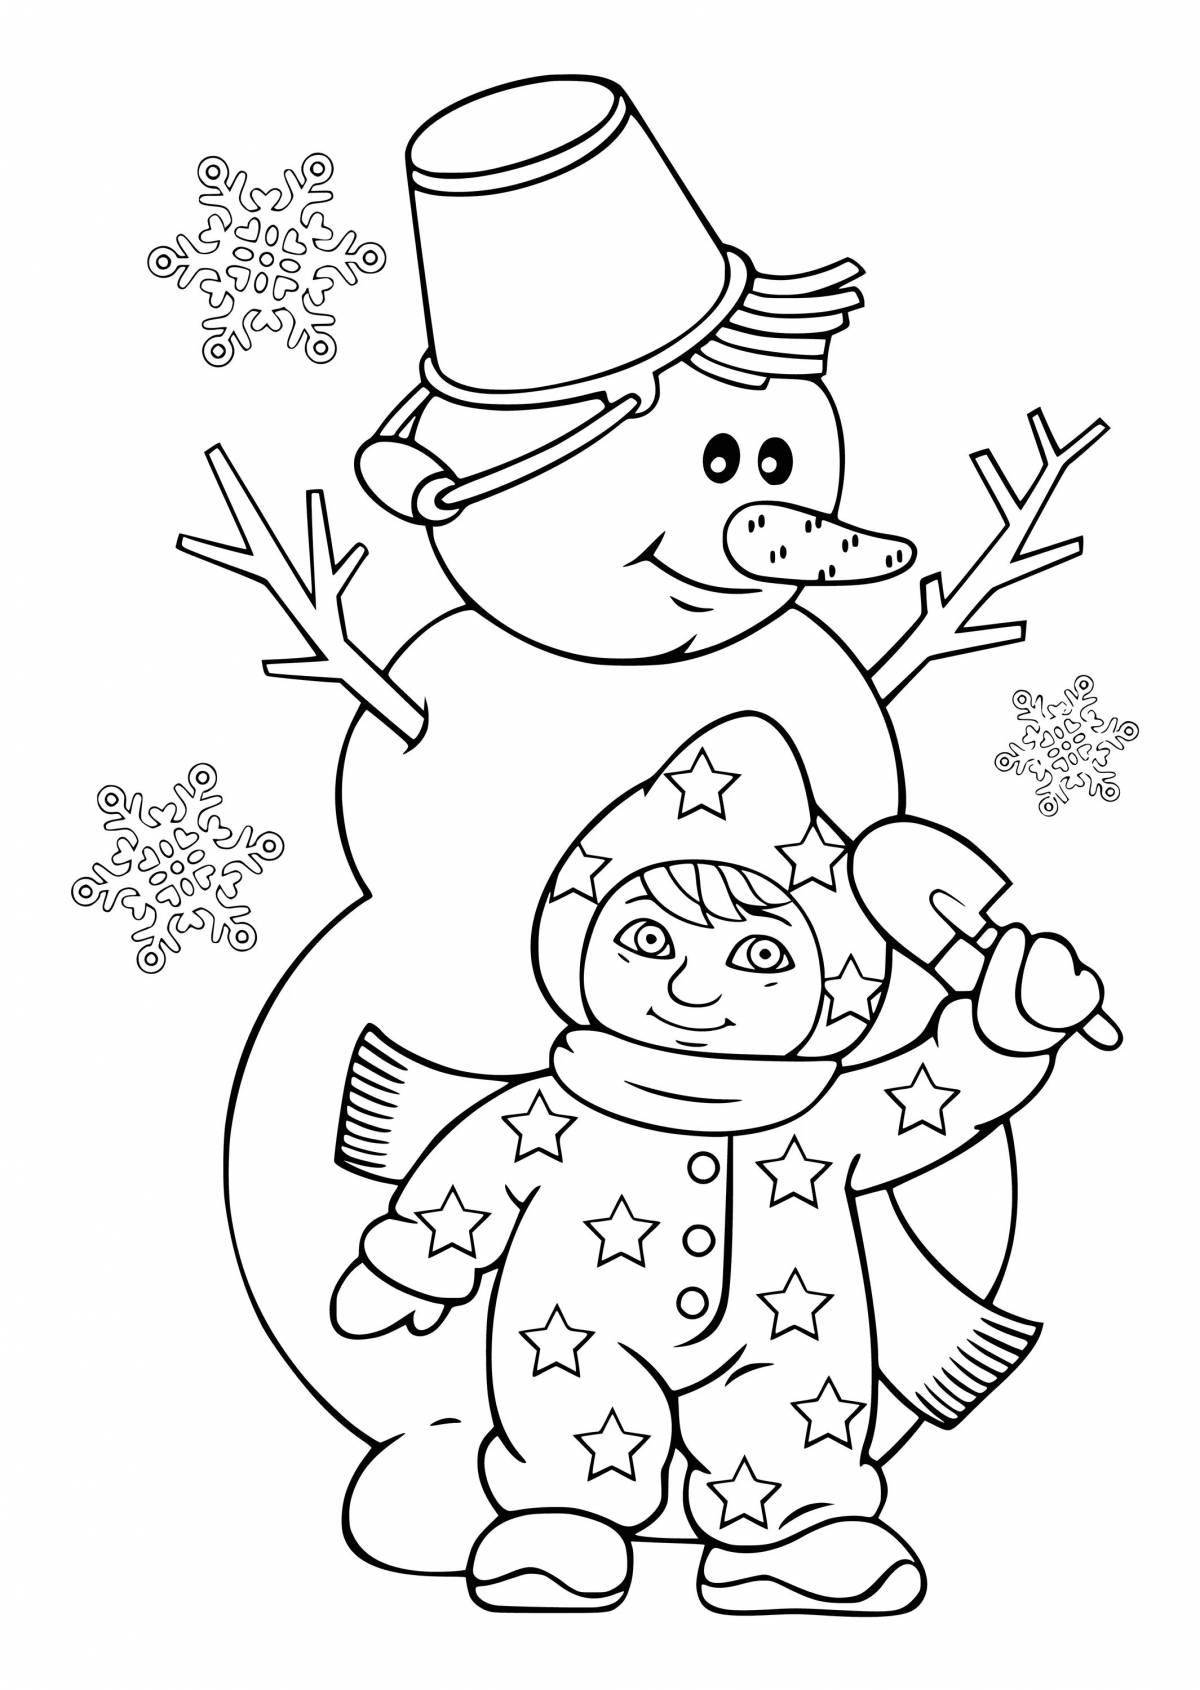 Glorious snowman coloring book